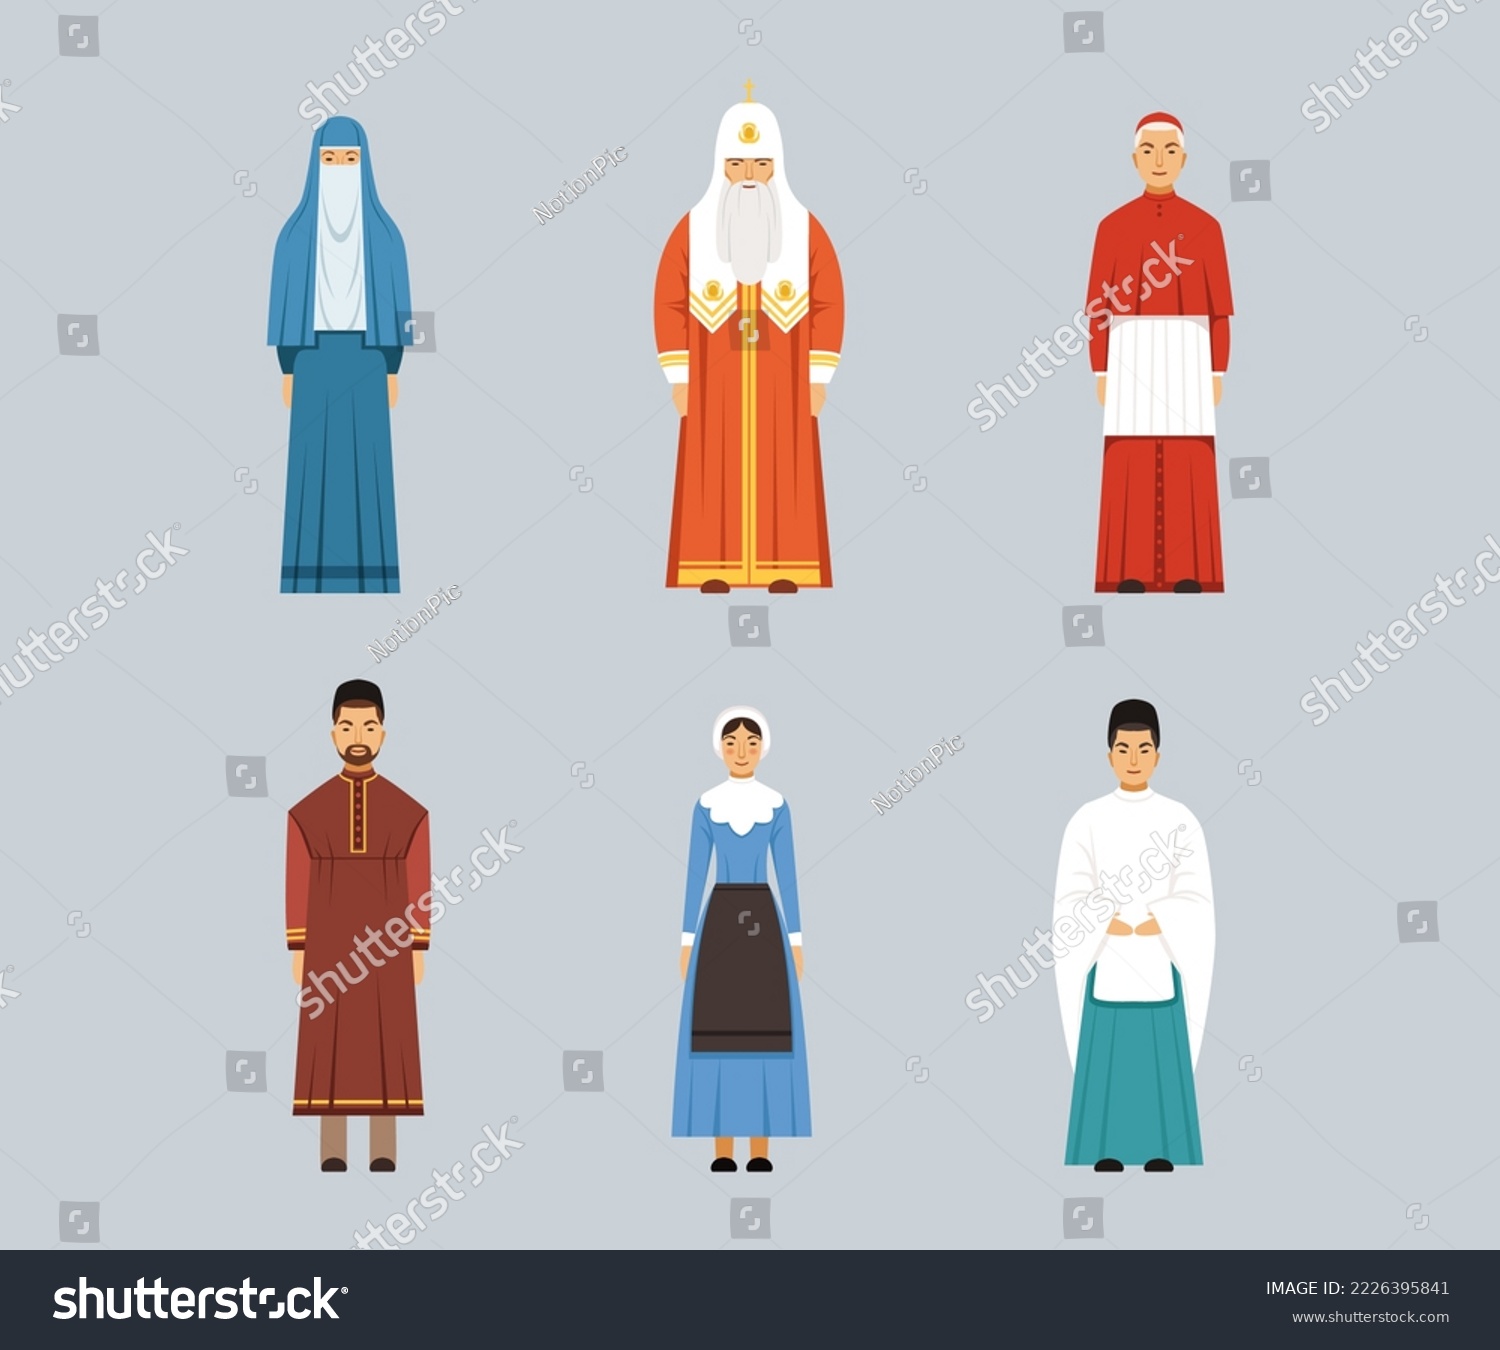 SVG of Representatives of religious confession set. Catholic Cardinal, Orthodox Patriarch, Mennonite or Amish woman vector illustration svg